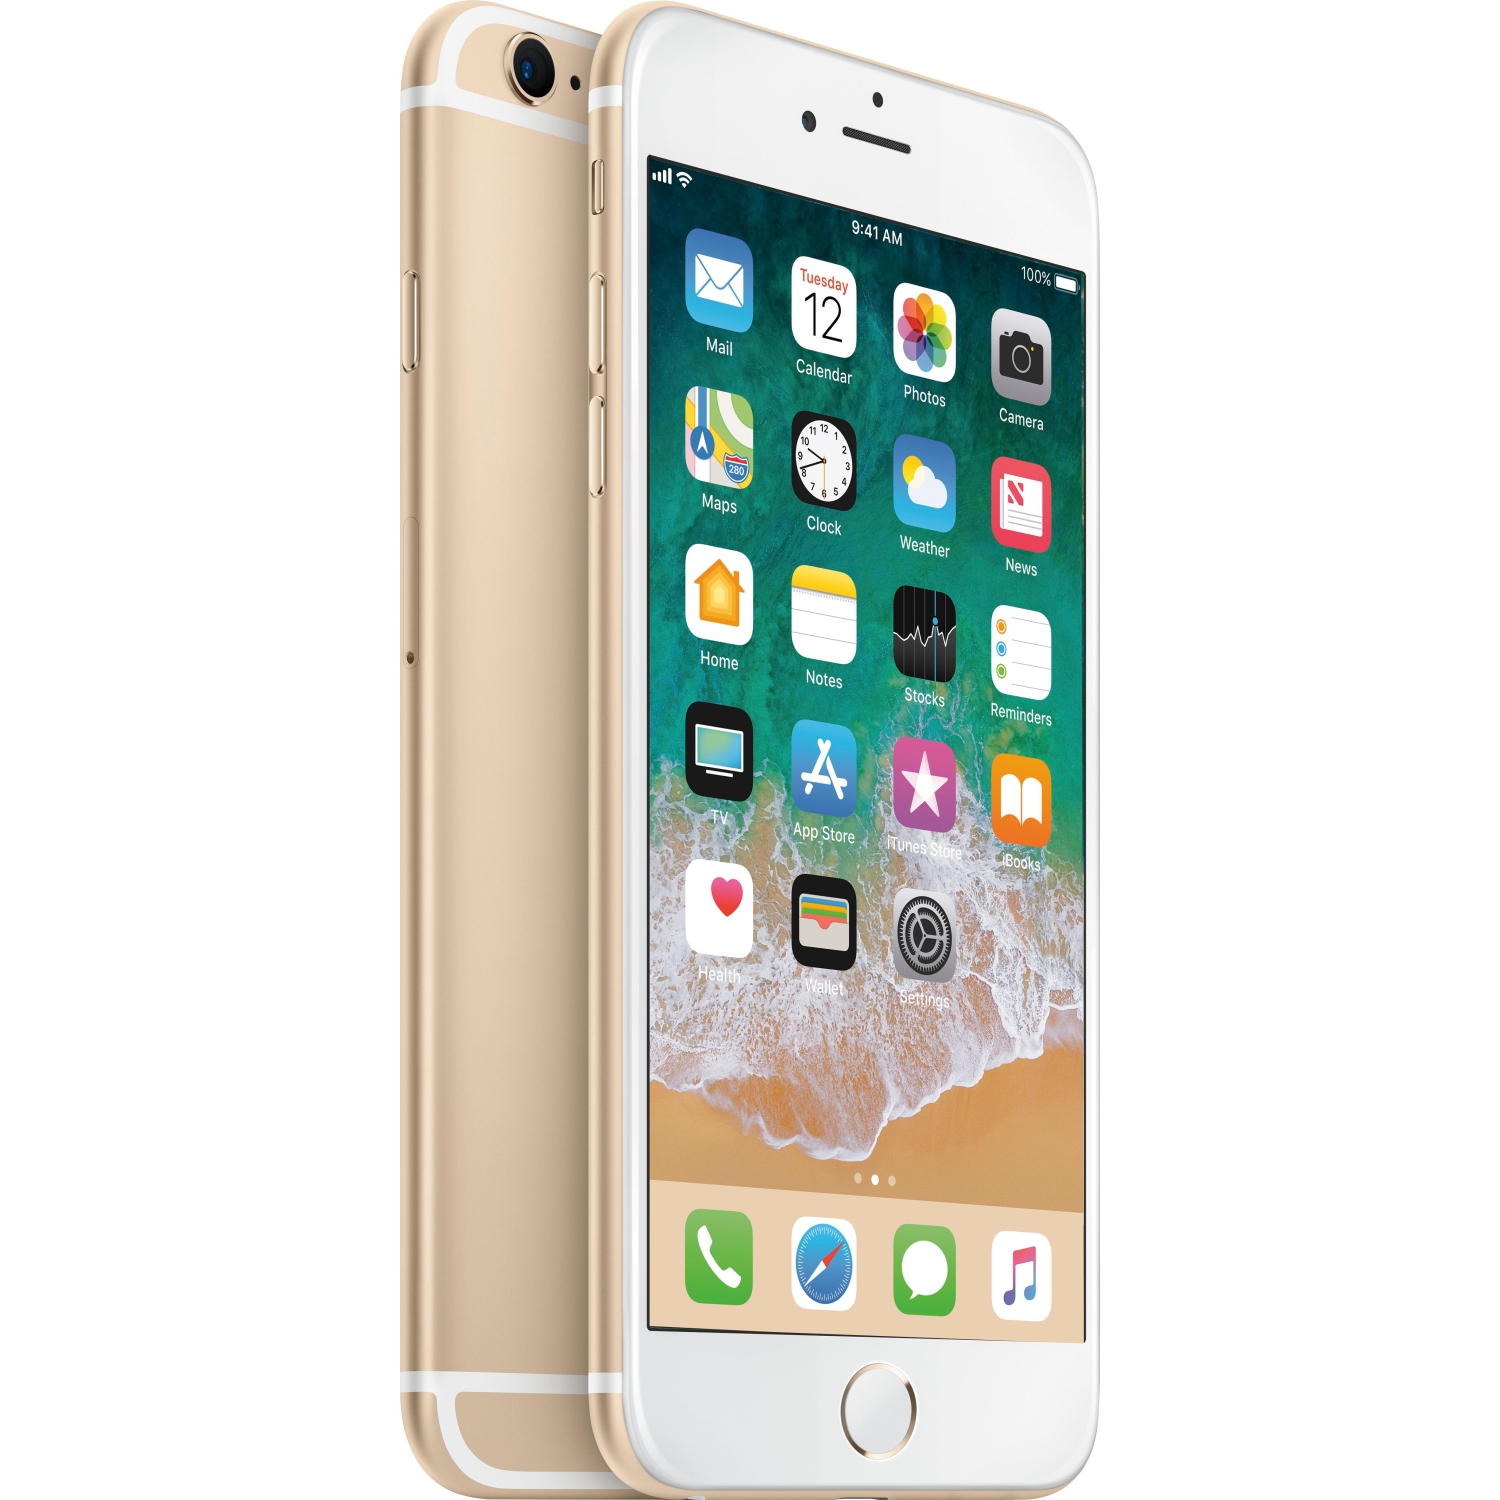 Refurbished (Excellent) - Apple iPhone 6s Plus 64GB Smartphone - Gold - Unlocked - Certified Refurbished